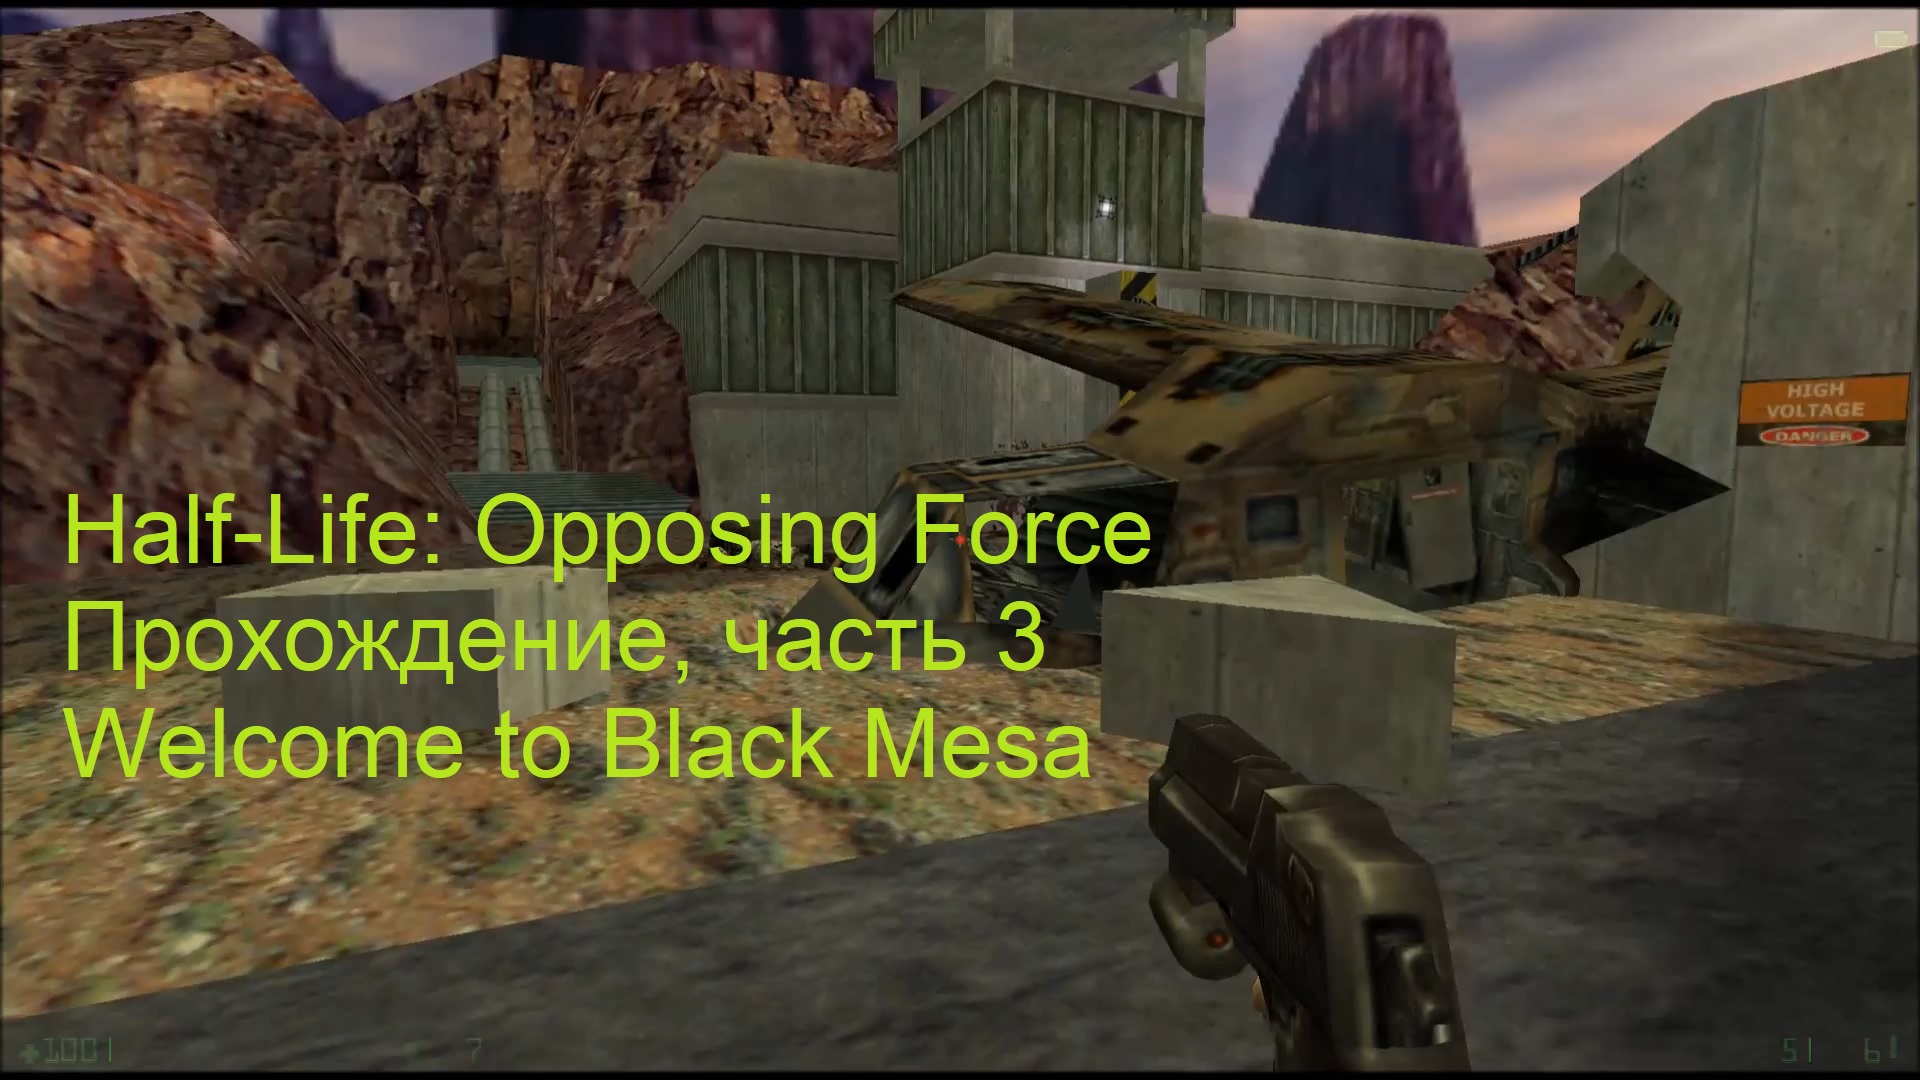 Half-Life: Opposing Force, Прохождение, часть 3 - Welcome to Black Mesa